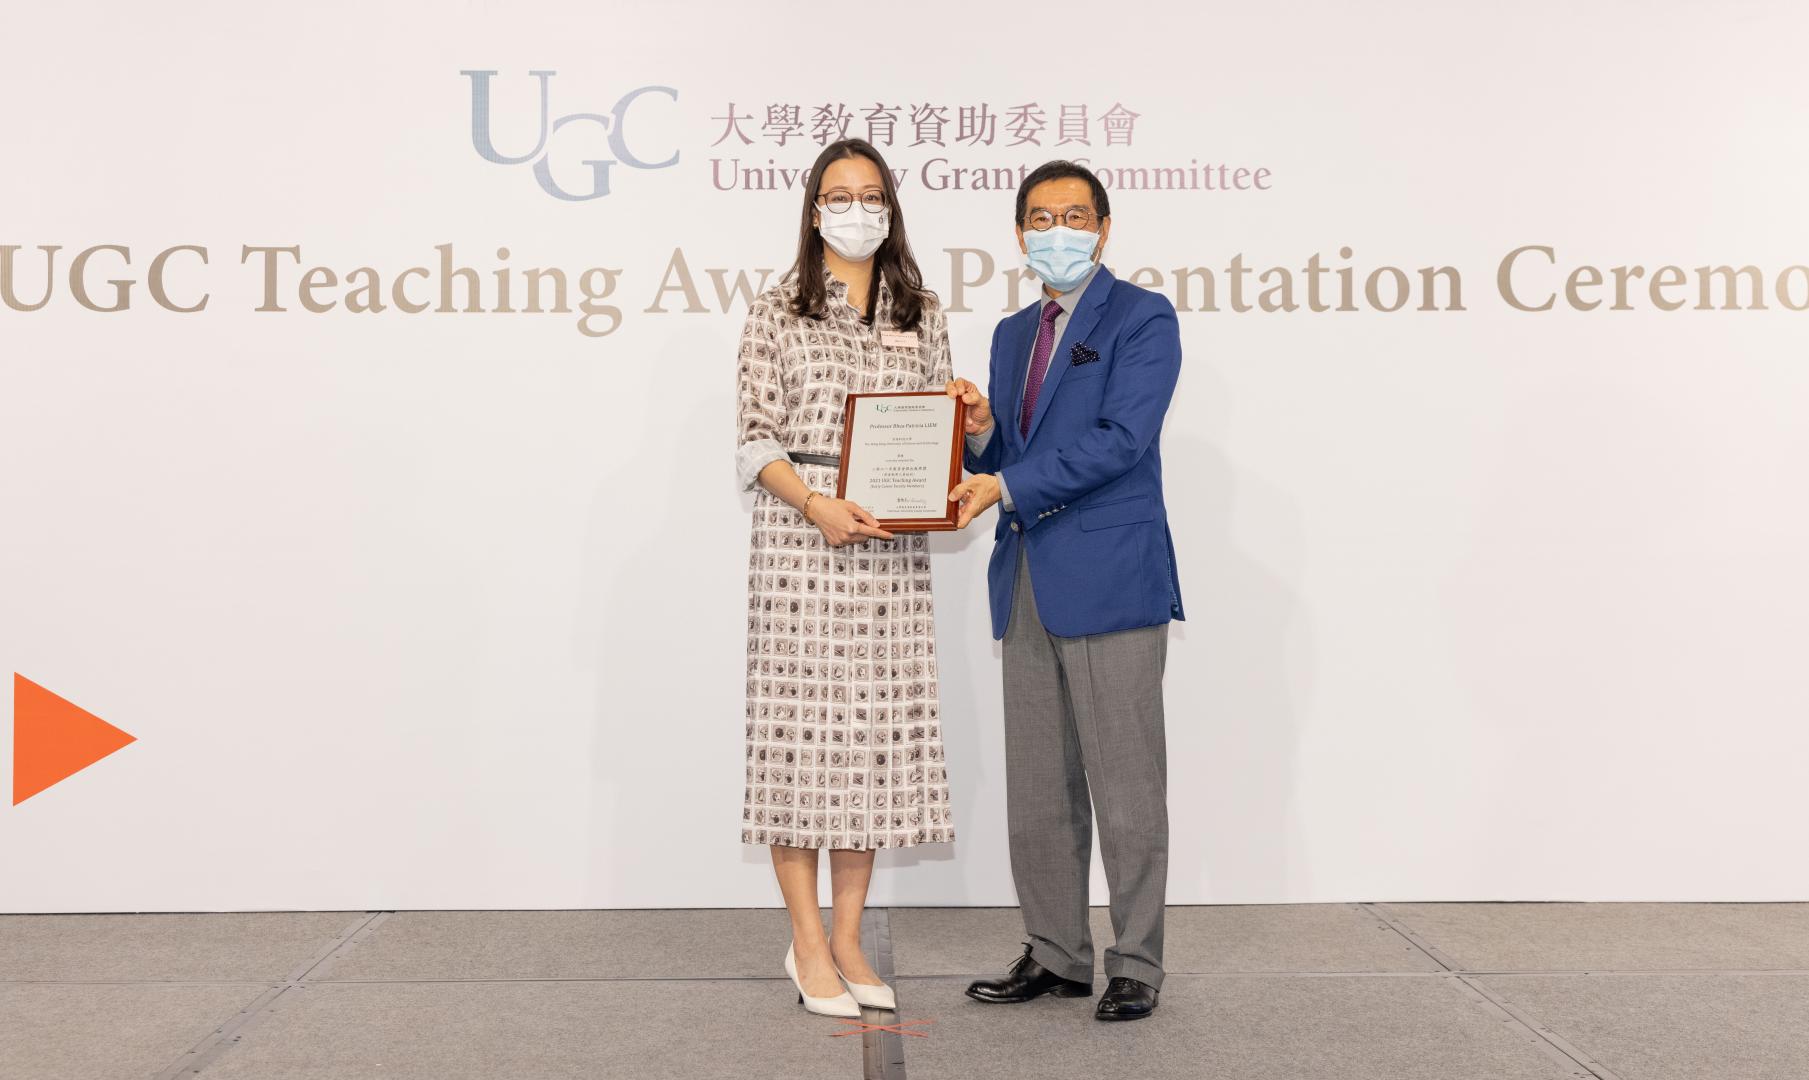 Prof. Liem winning the UGC Award